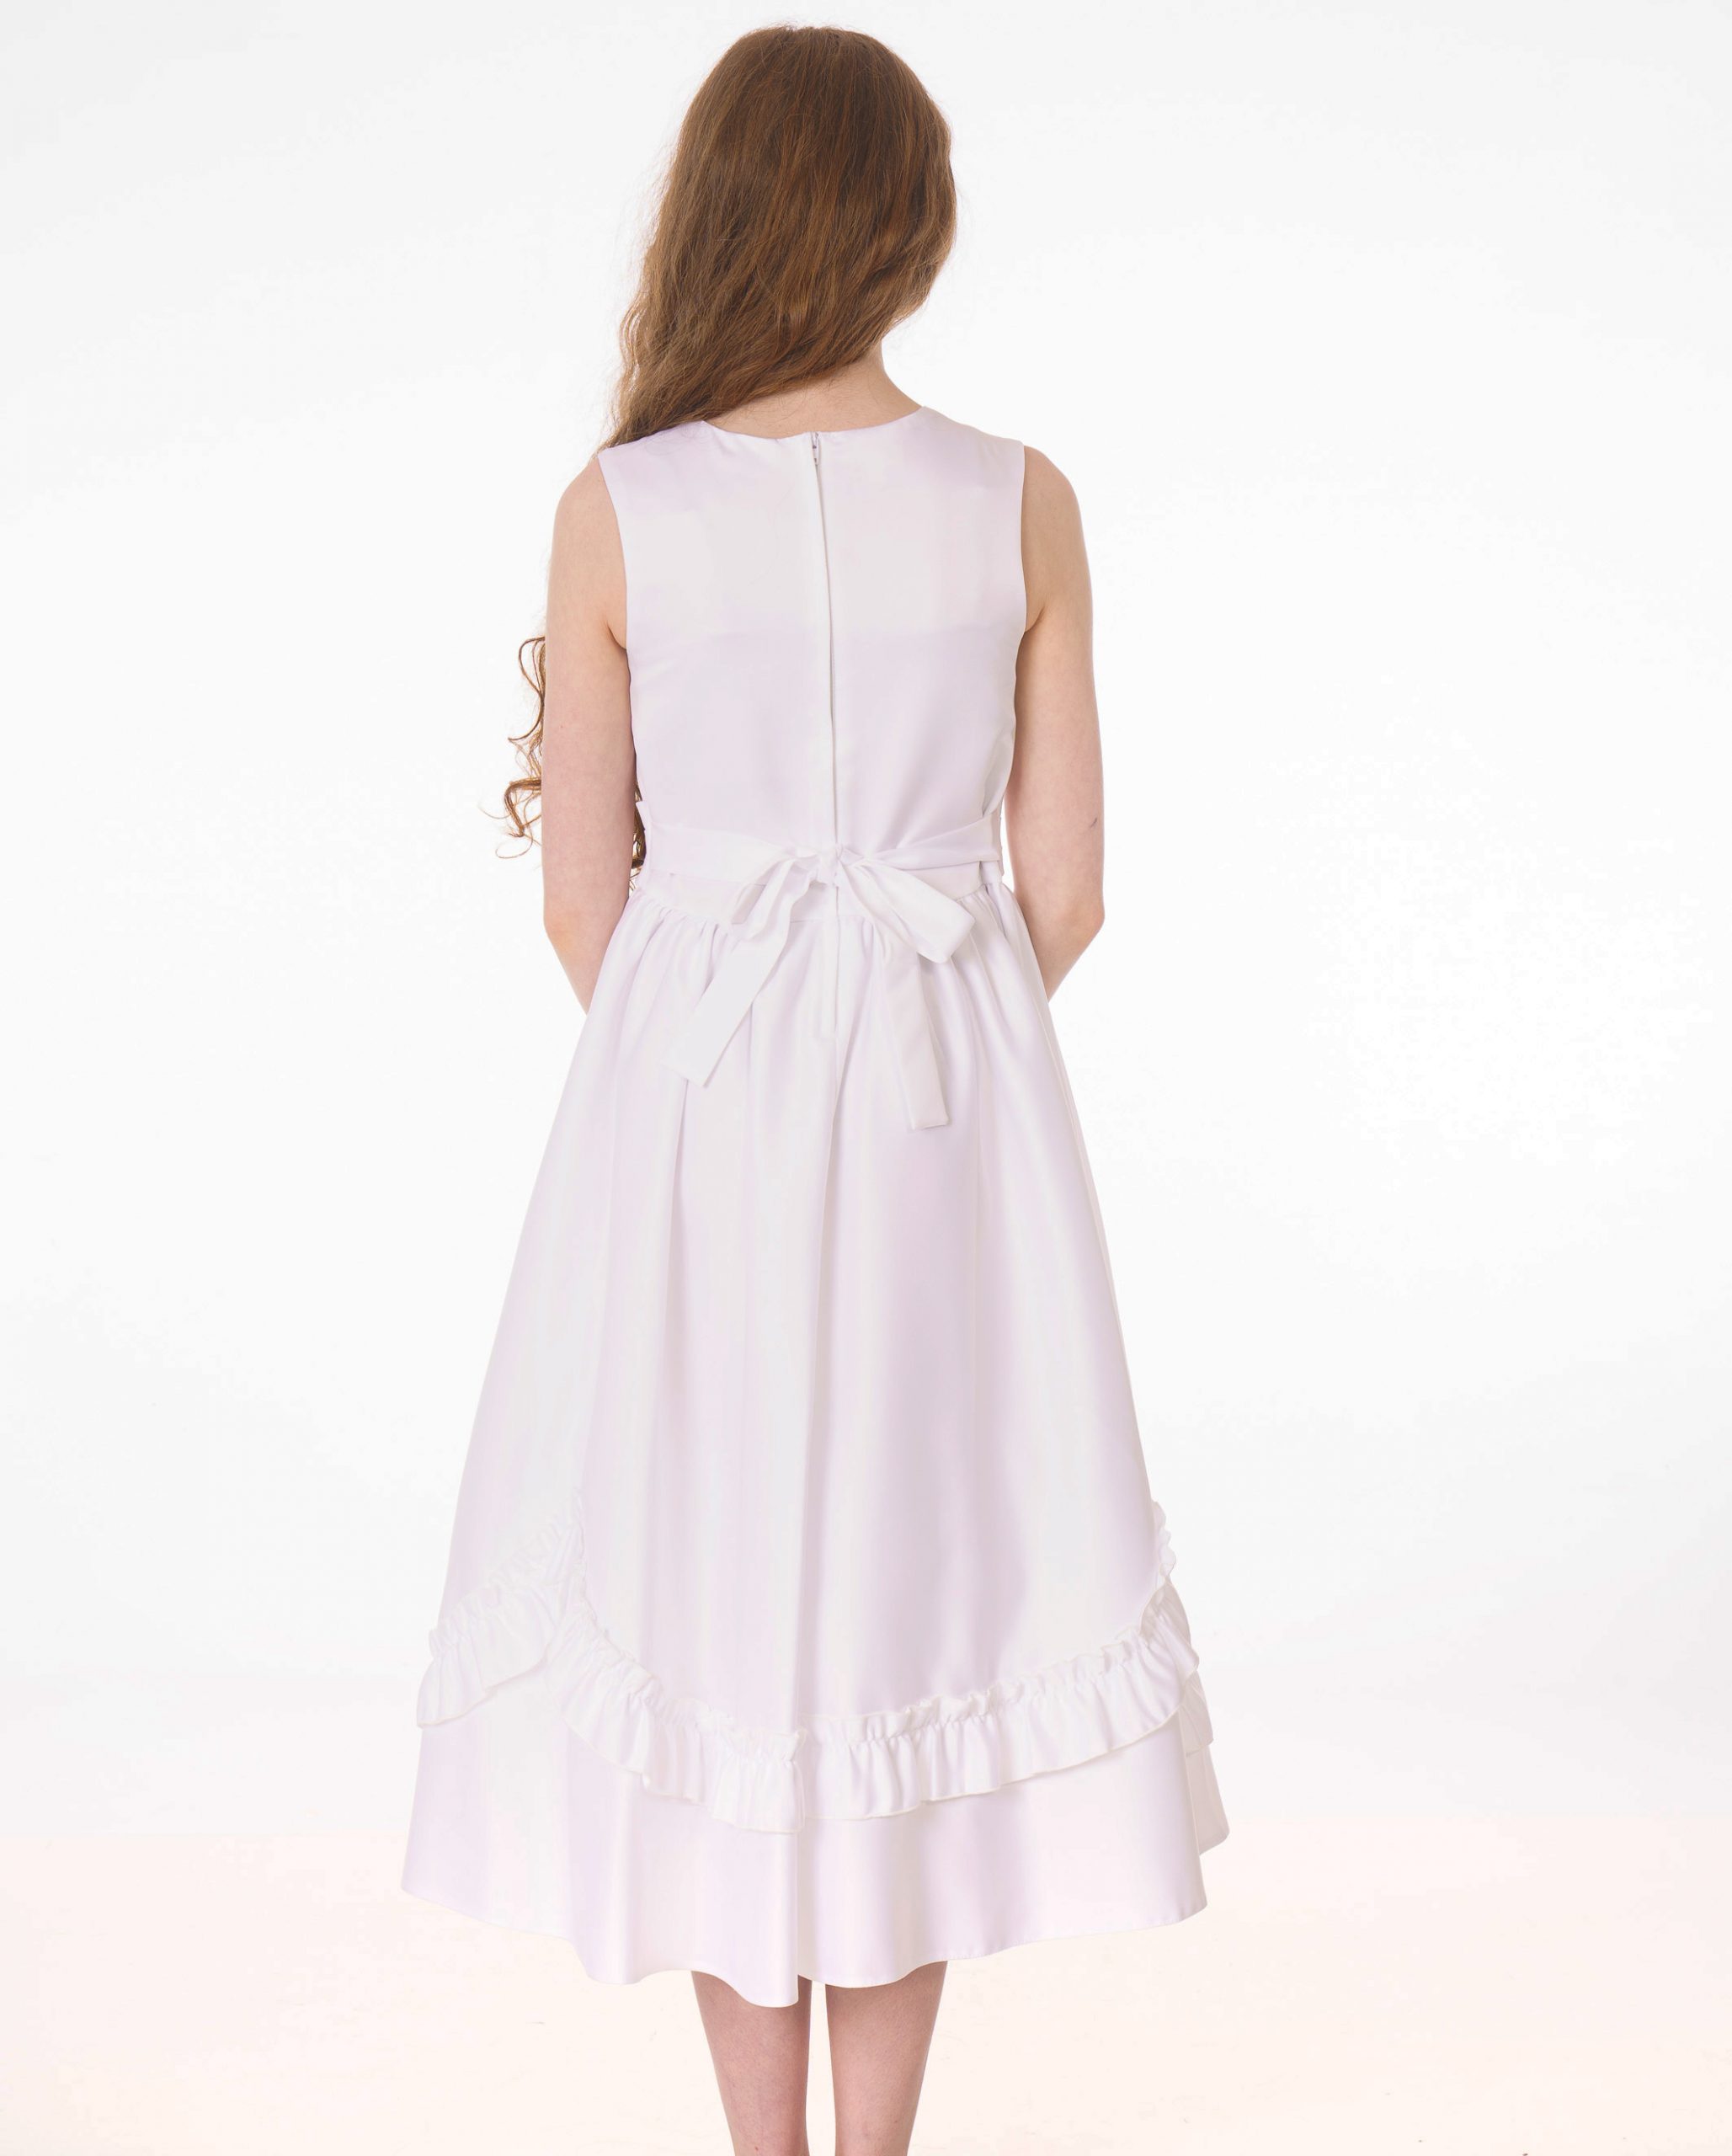 White Olivia Christening/ Bridesmaid/ Party Dress 